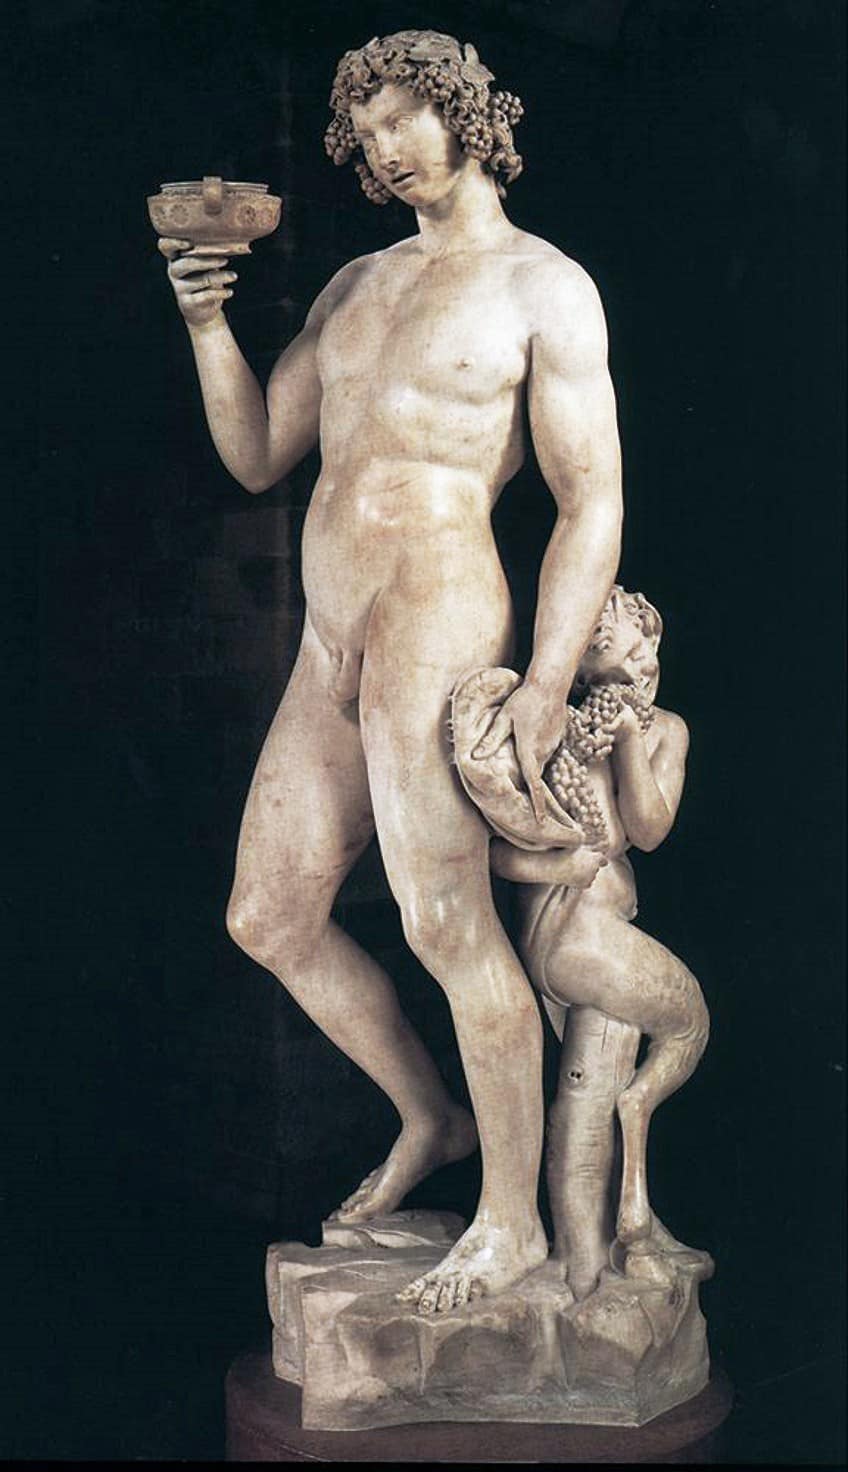 Famous Michelangelo Sculptures to Know